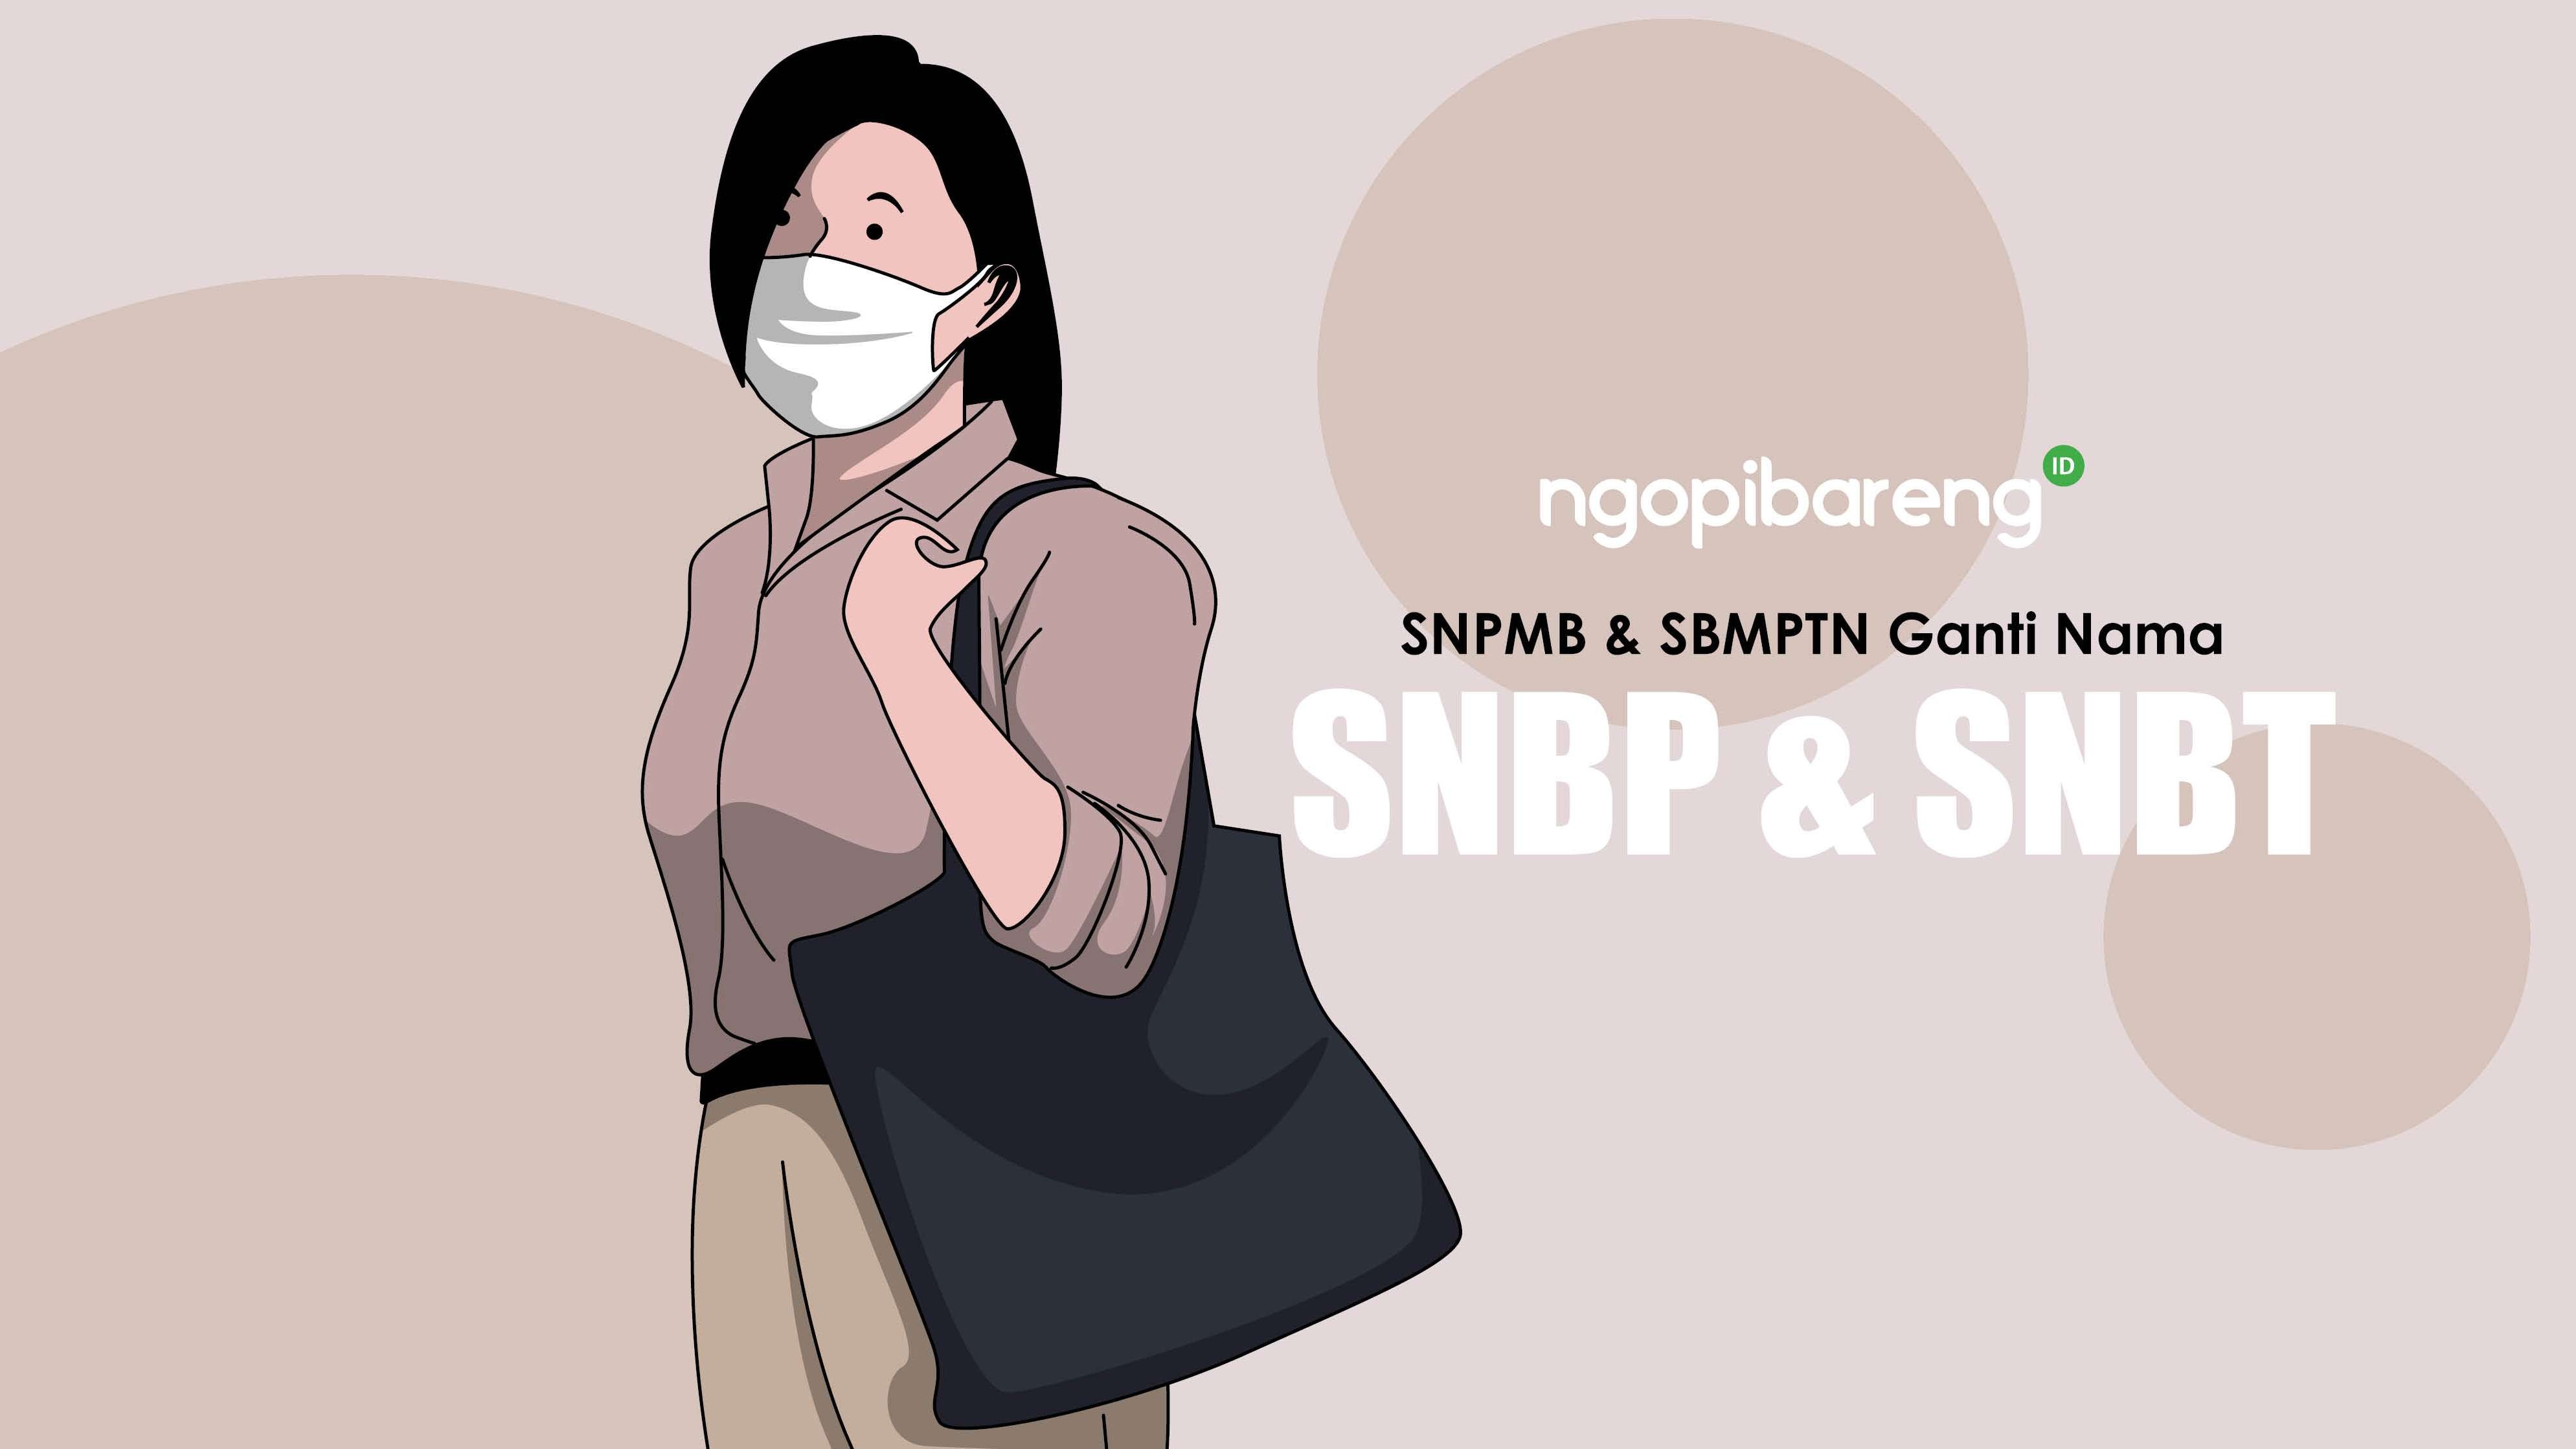 SNMPTN dan SBMPTN ganti nama menjadi SNBP dan SNBT. (Ilustrasi: Fa Vidhi/Ngopibareng.id)